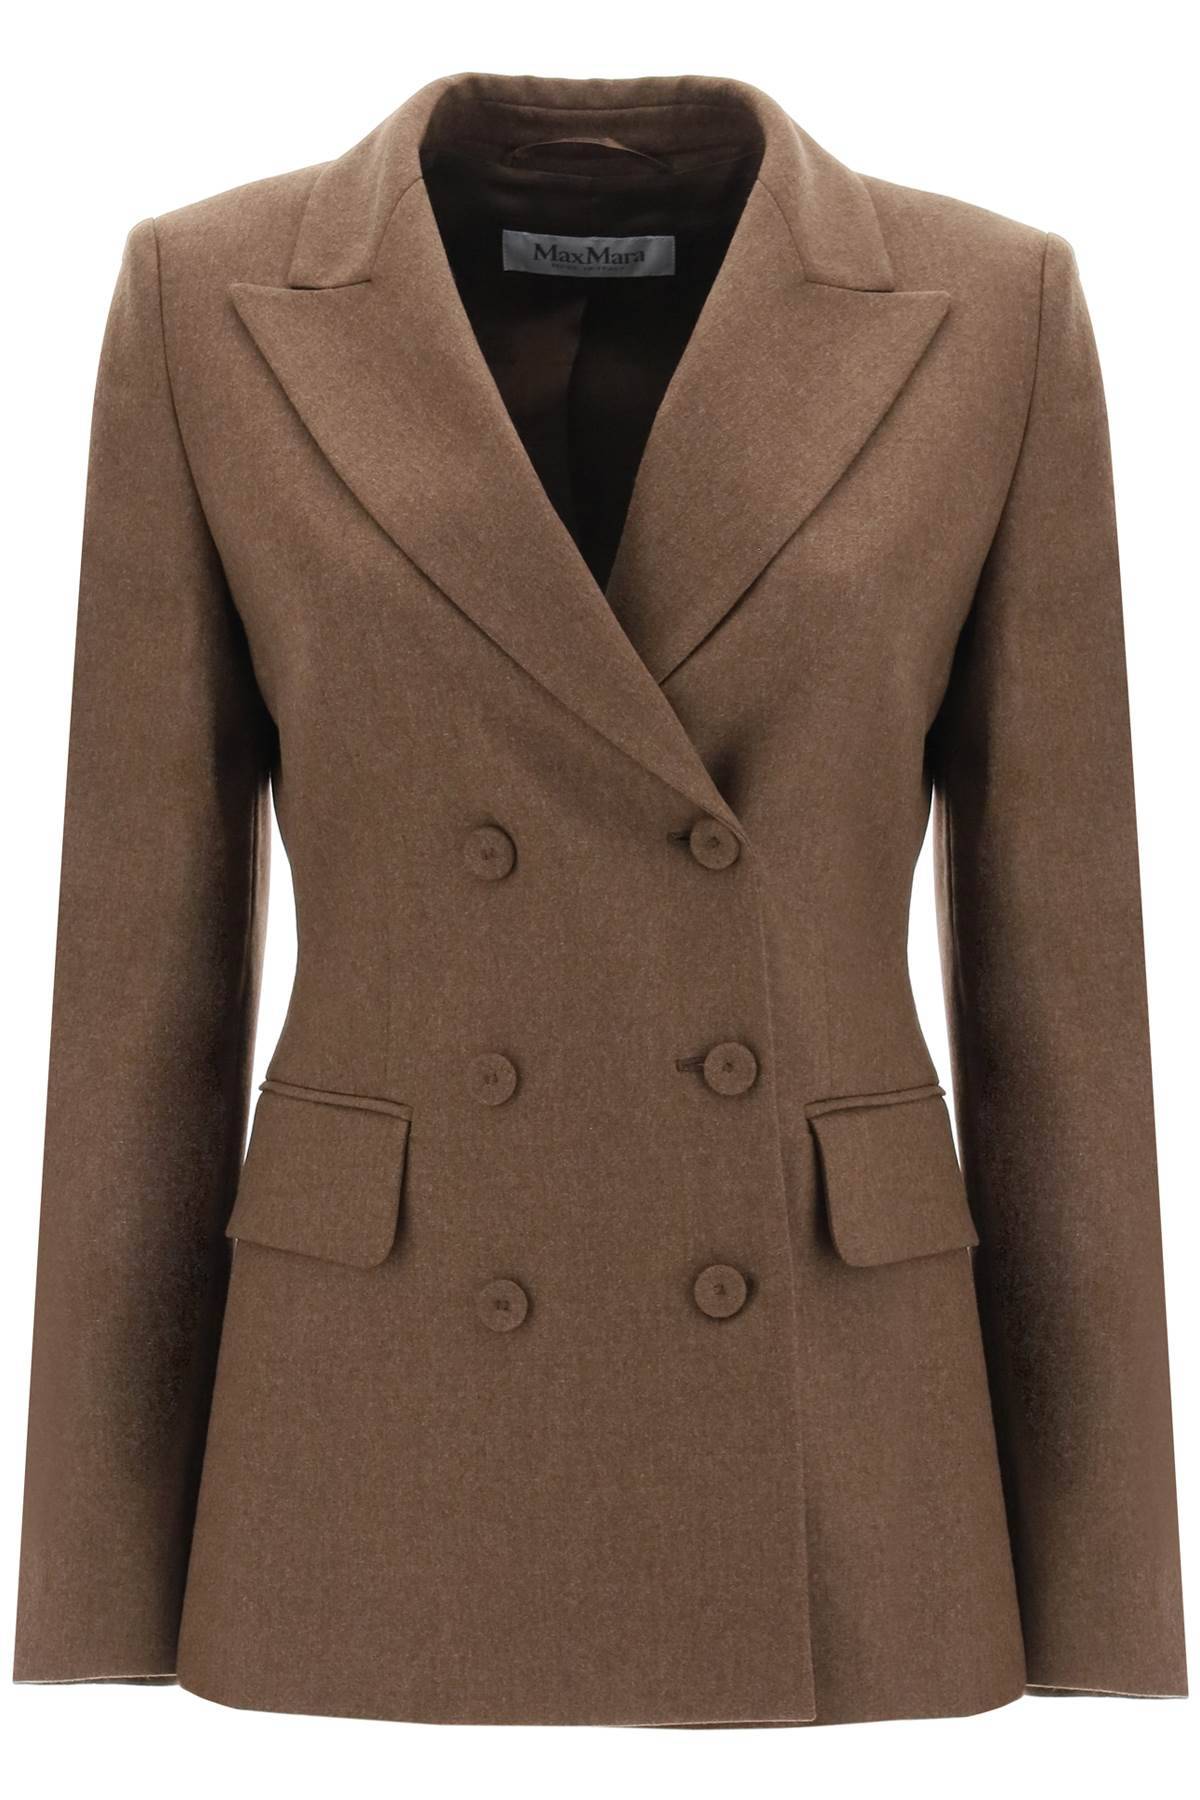 Max Mara 'landa' Wool And Cashmere Jacket In Brown